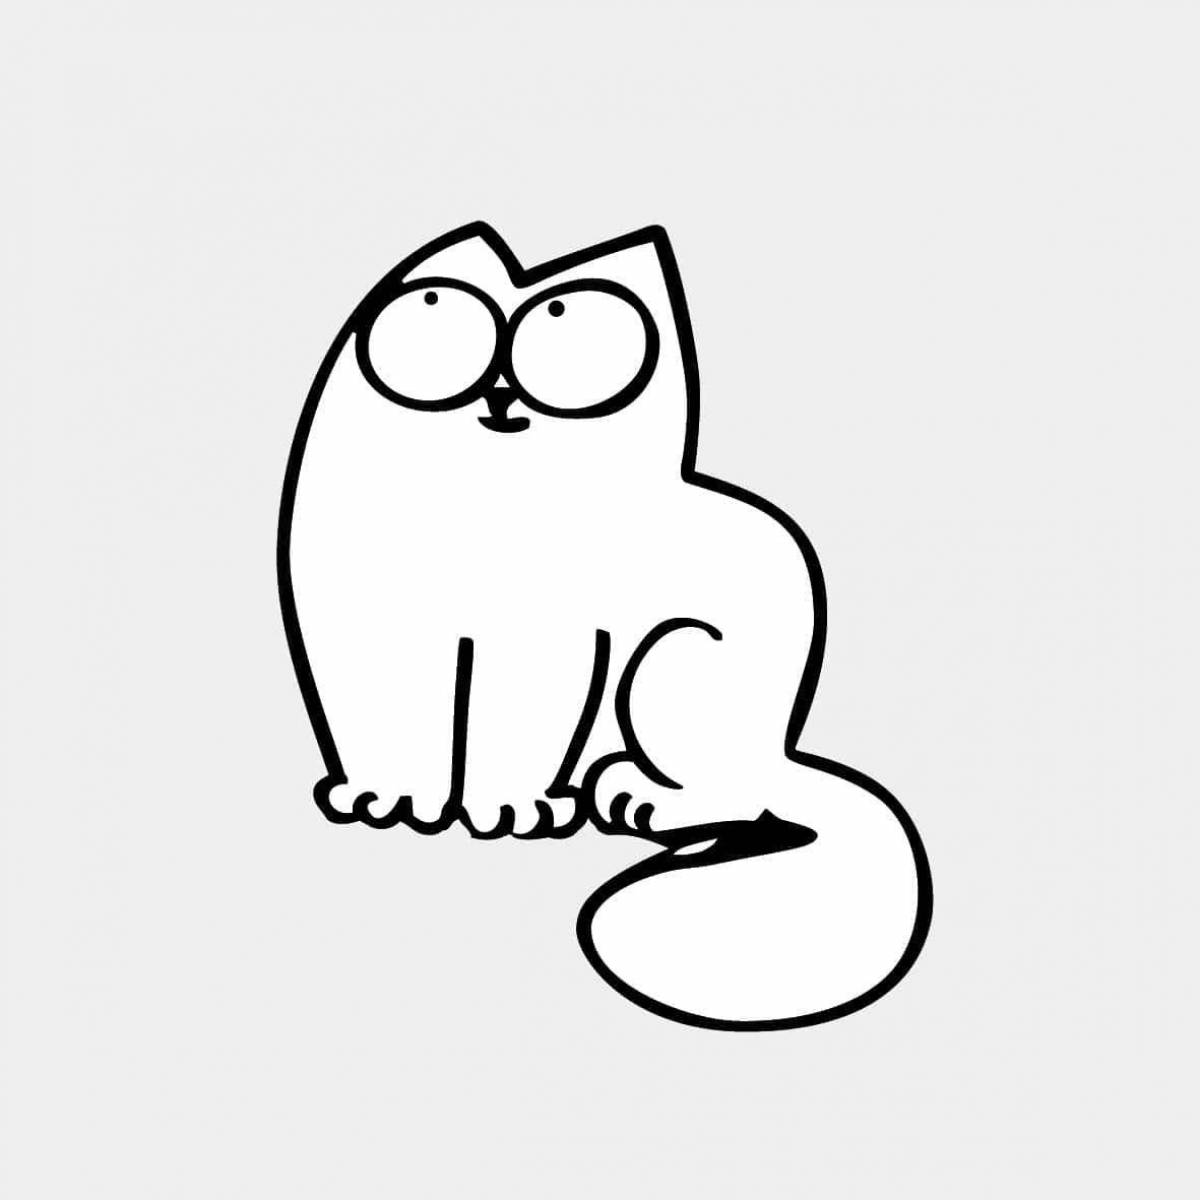 Легко. Симонс Кэт. Рисунки для срисовки котики. Рисунки котиков для срисовки. Рисунок кота легкий для срисовки.